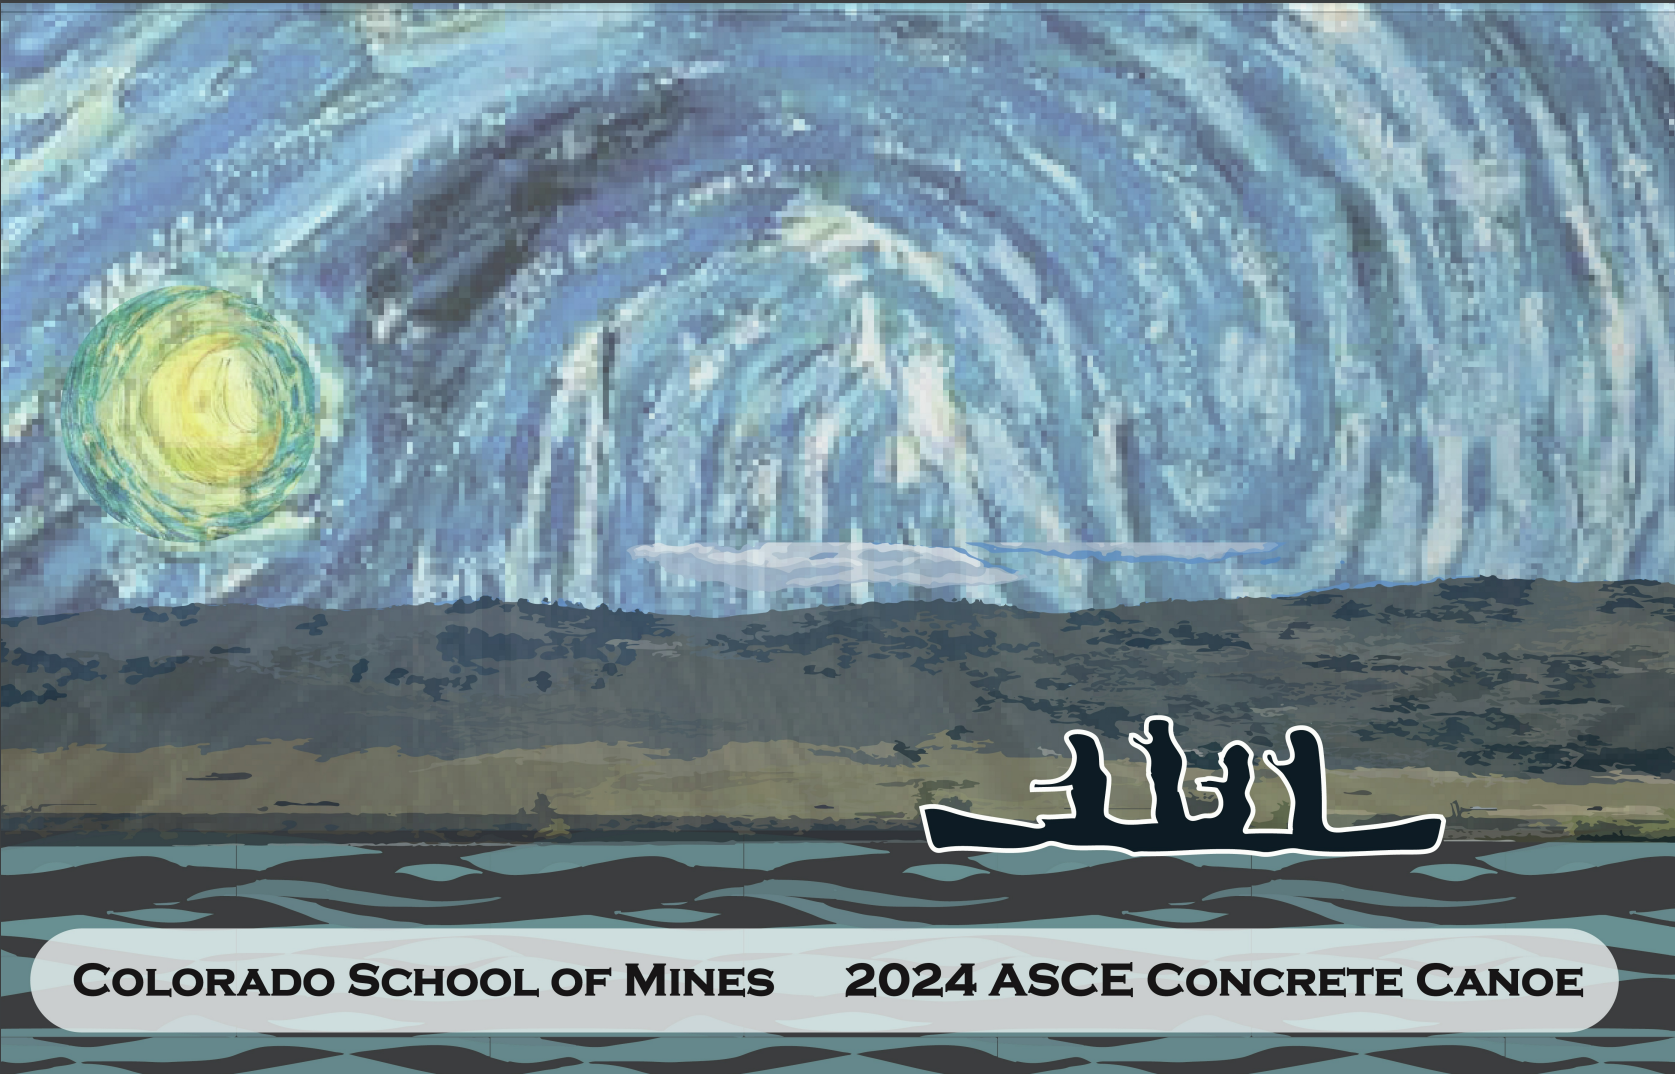 Starry night logo, ASCE concrete canoe 2024